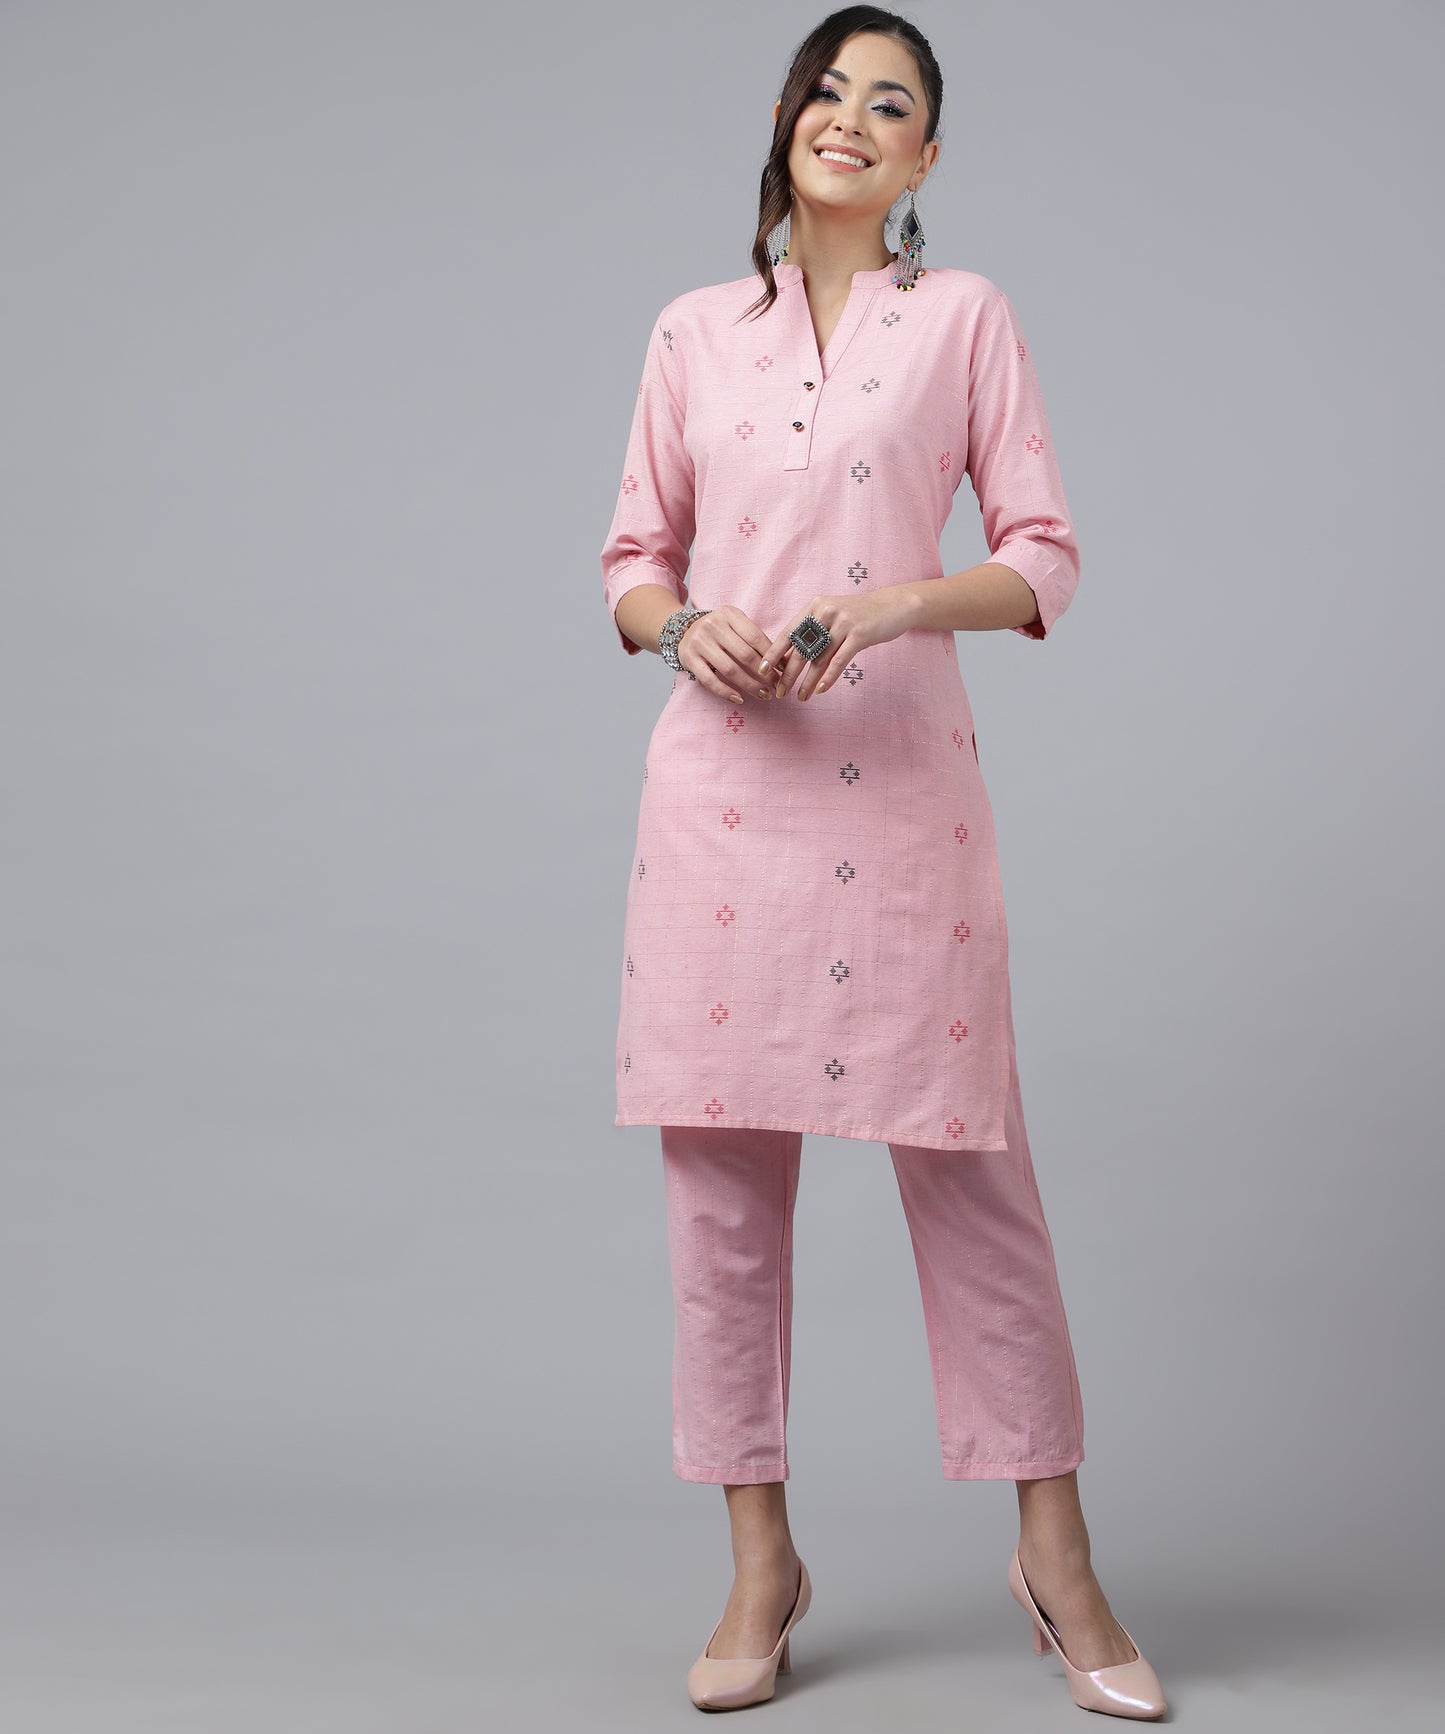 ANUSHIL Kurta Pant Set with Dupatta: Stunning V-Neck Lurex Checks and Embroidery, 3/4 Sleeves, Self-Design Pocket, Cotton Fabric(Pink)